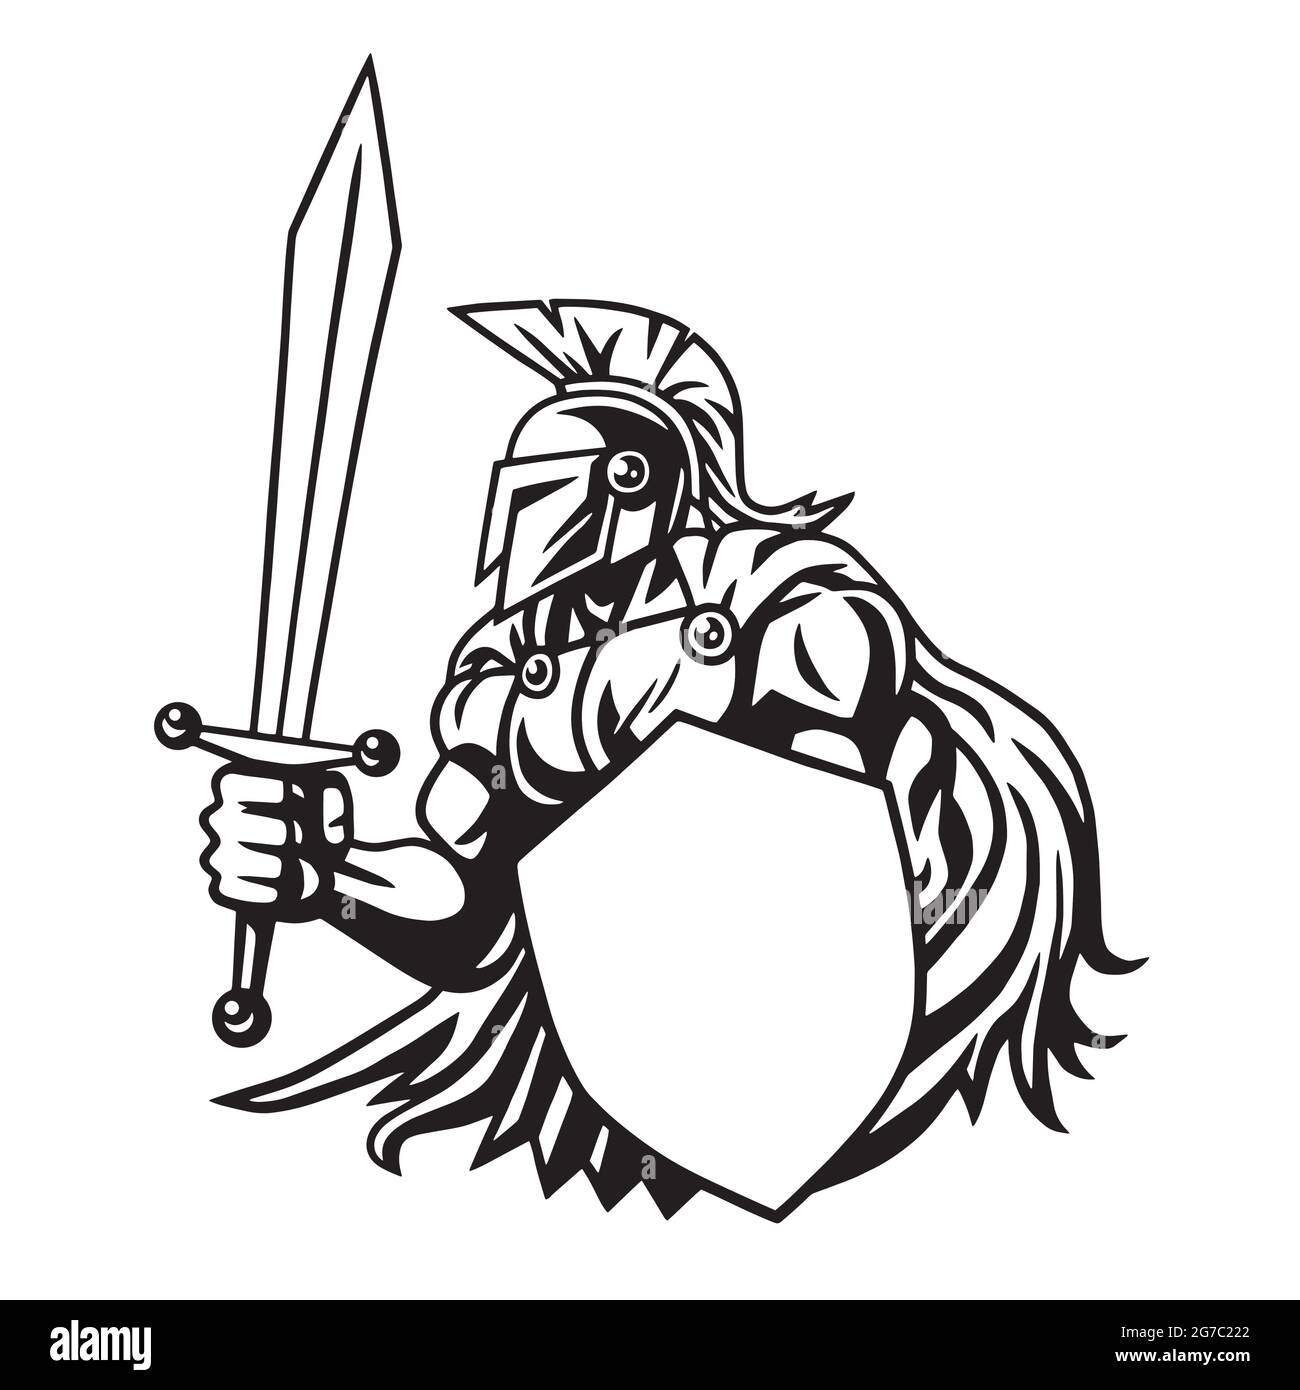 Spartan Warrior Drawing Vector Stock Vector